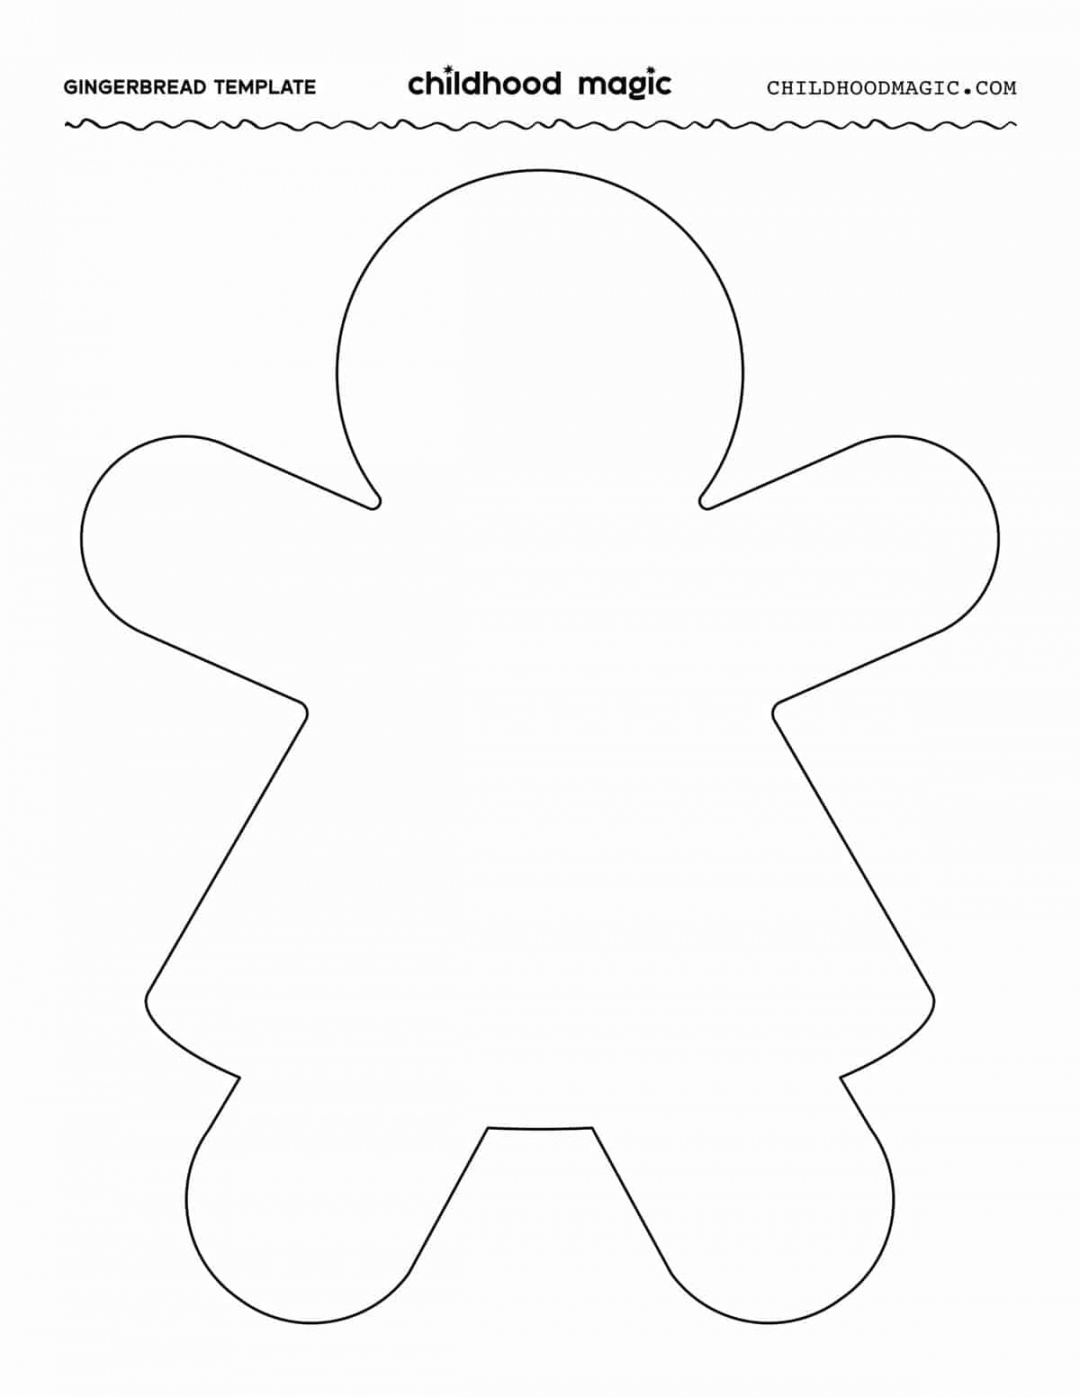 Gingerbread Man Template - Free Printable - Childhood Magic - FREE Printables - Gingerbread Man Template